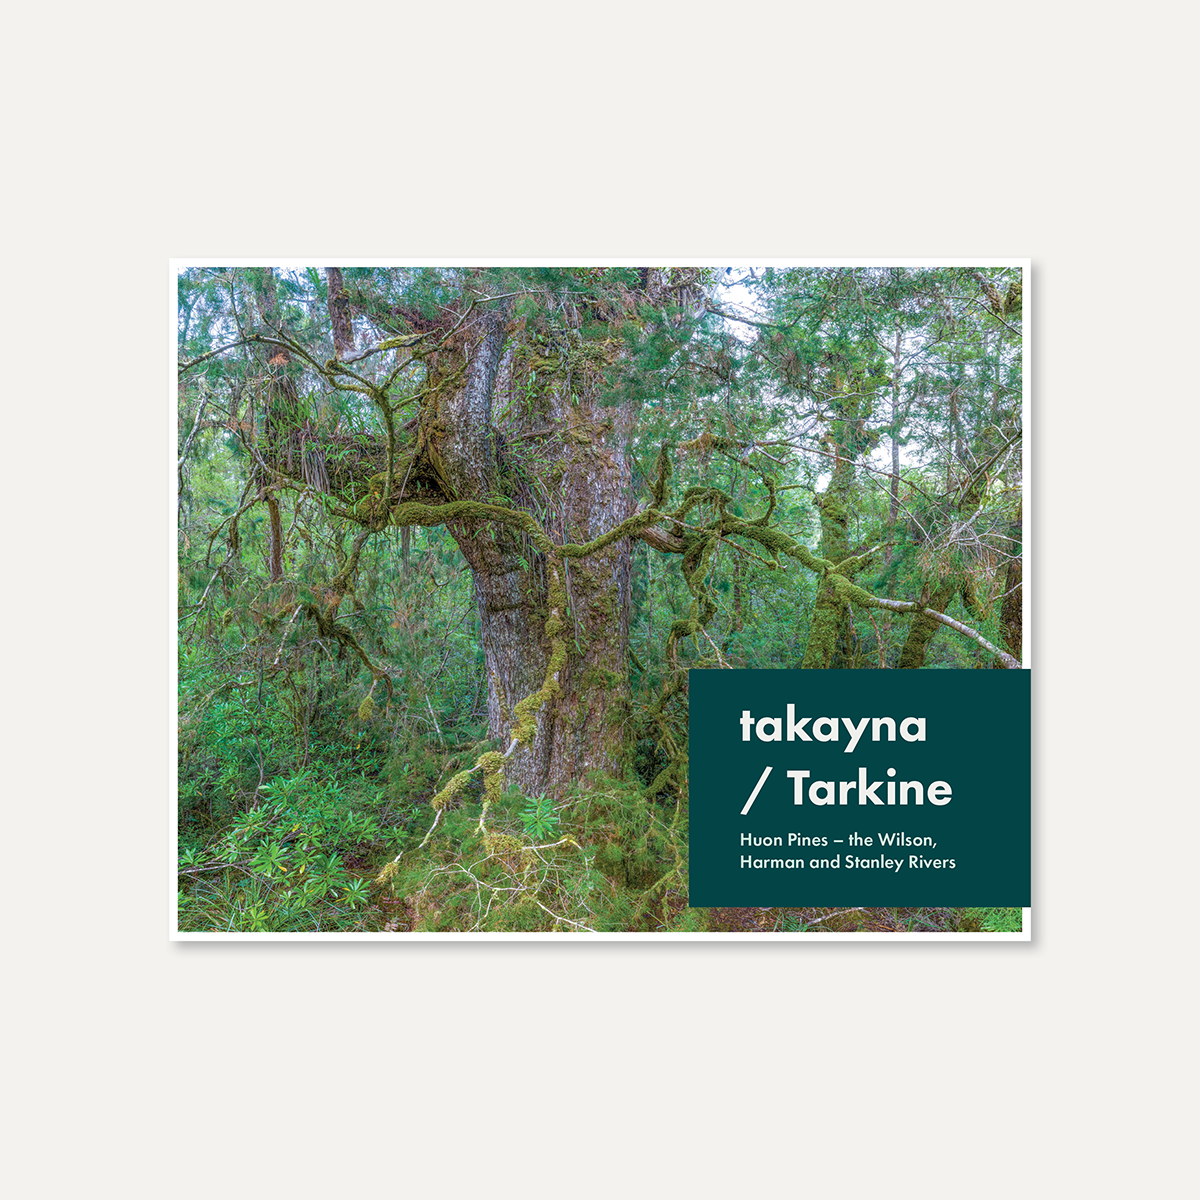 takayna/Tarkine Huon Pines - the Wilson, Harman and Stanley Rivers by Rob Blakers